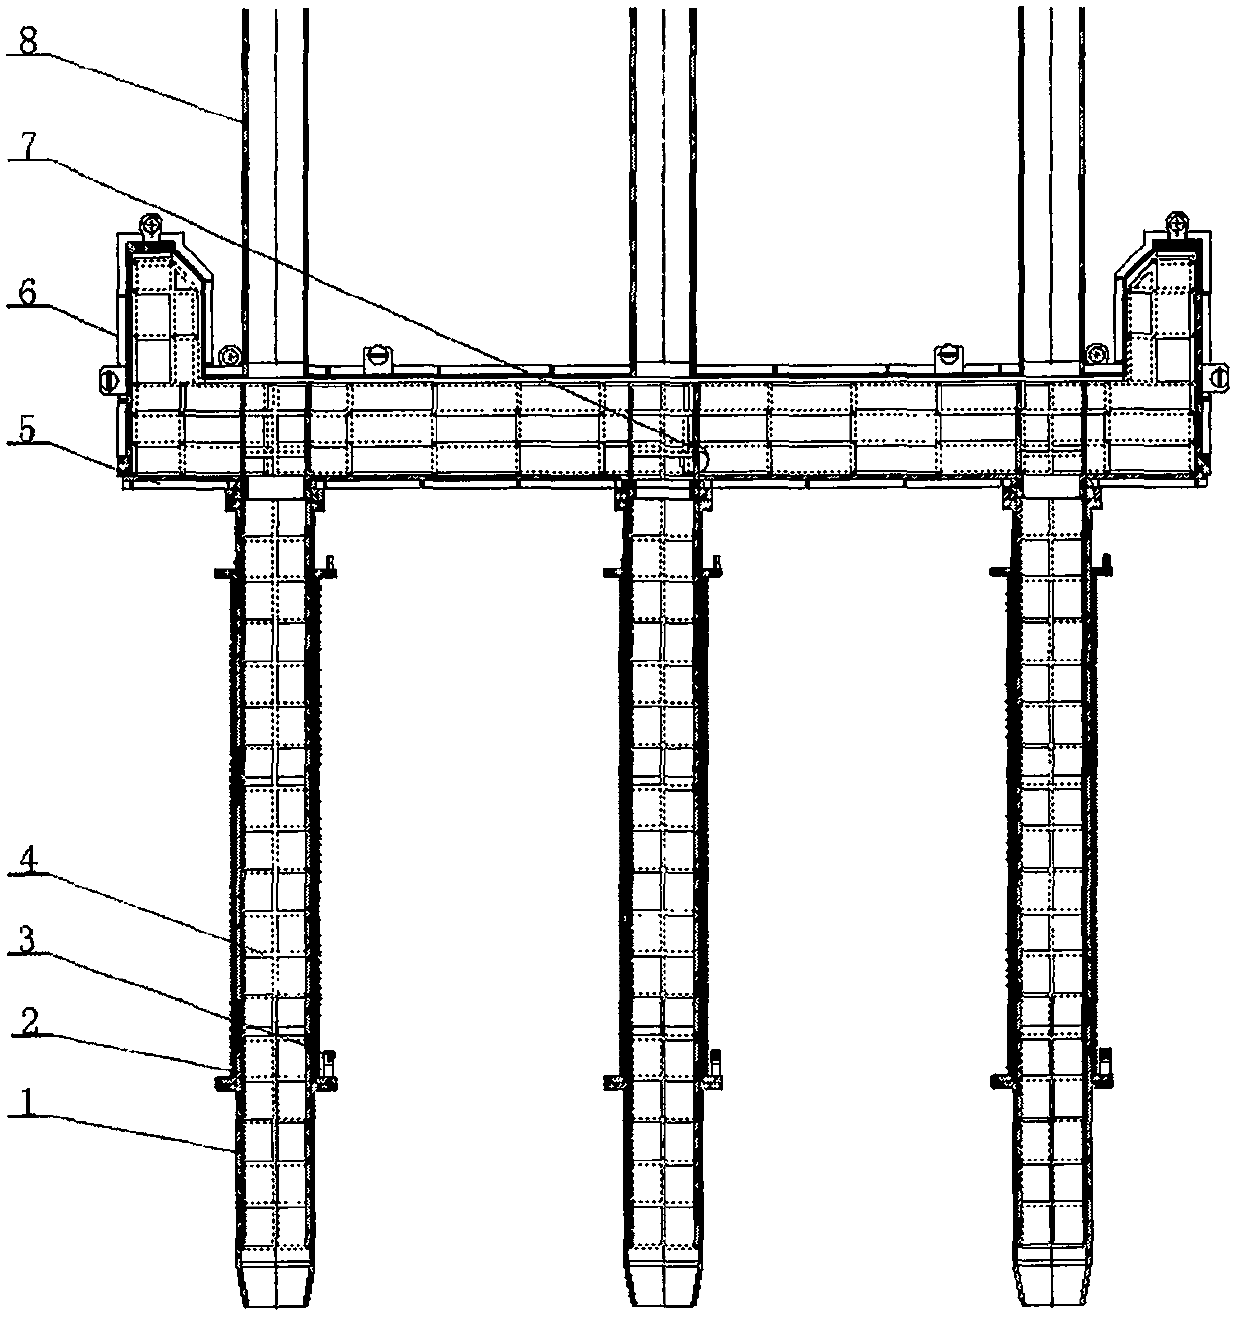 An underwater bearing platform, device and construction method for constructing an underwater bearing platform